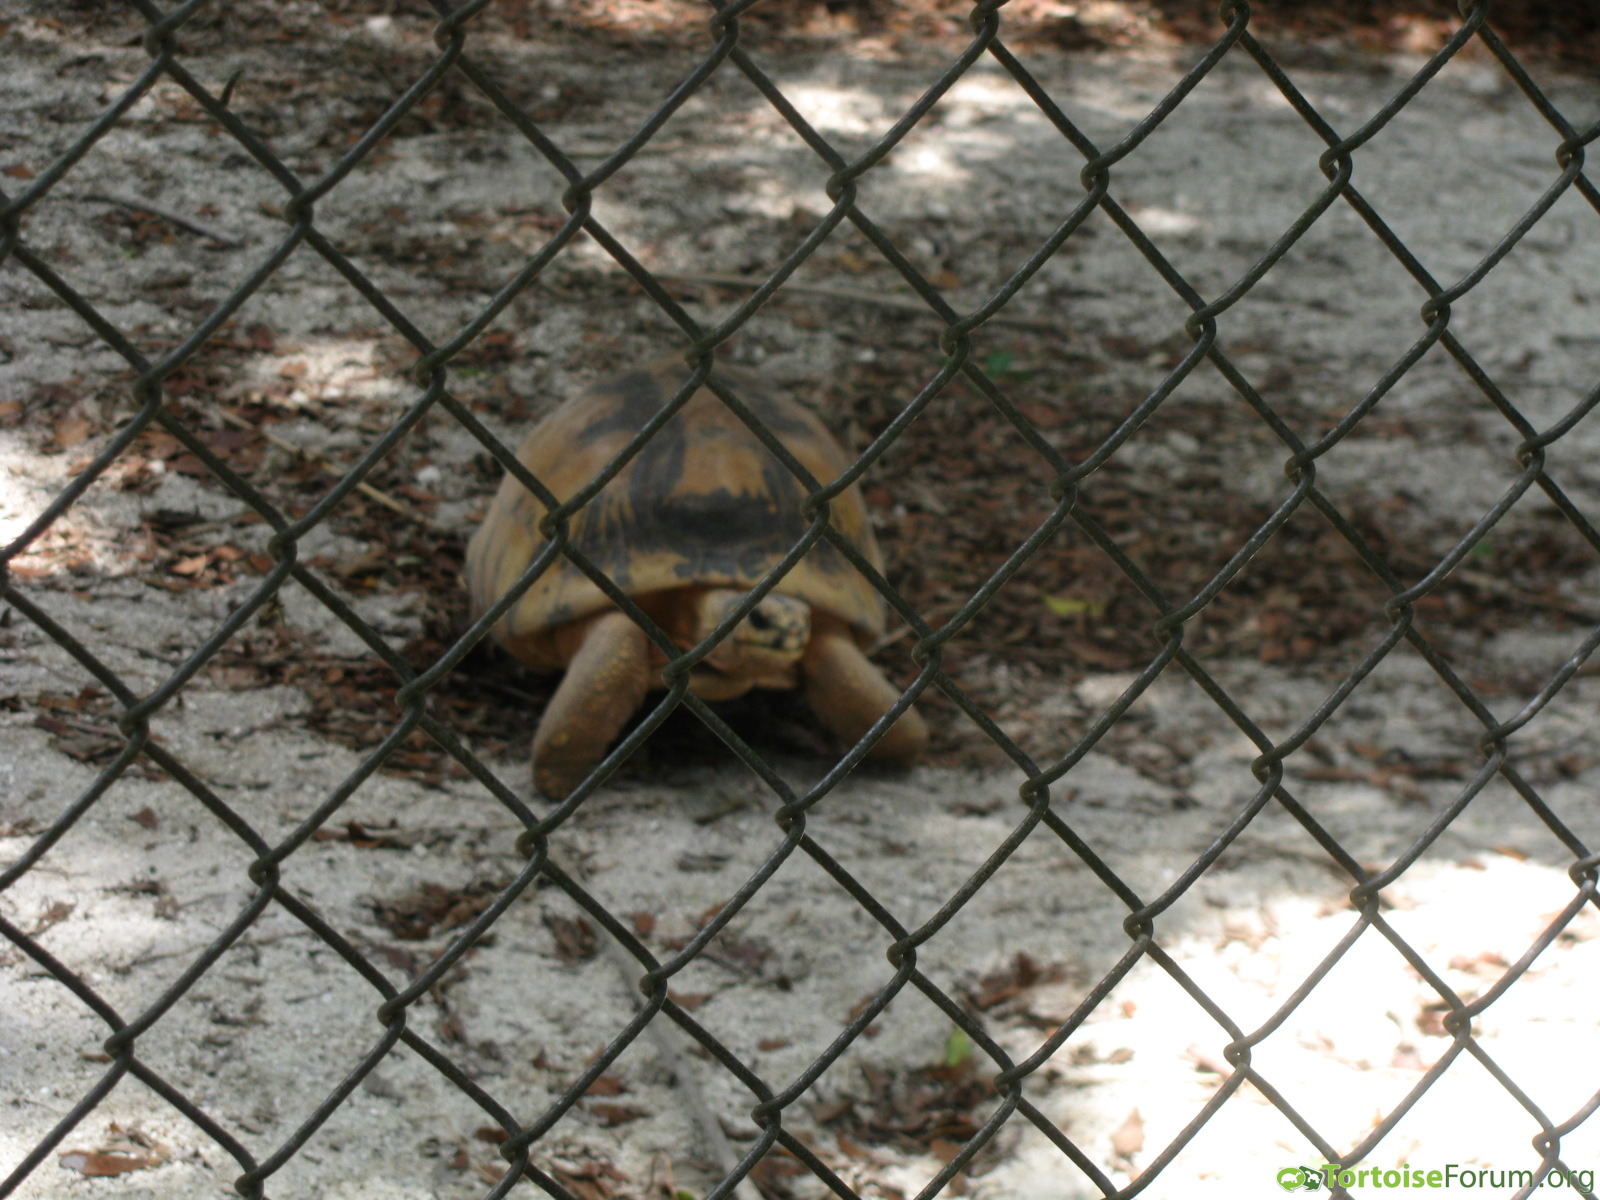 My local zoo's Radiated tortoise